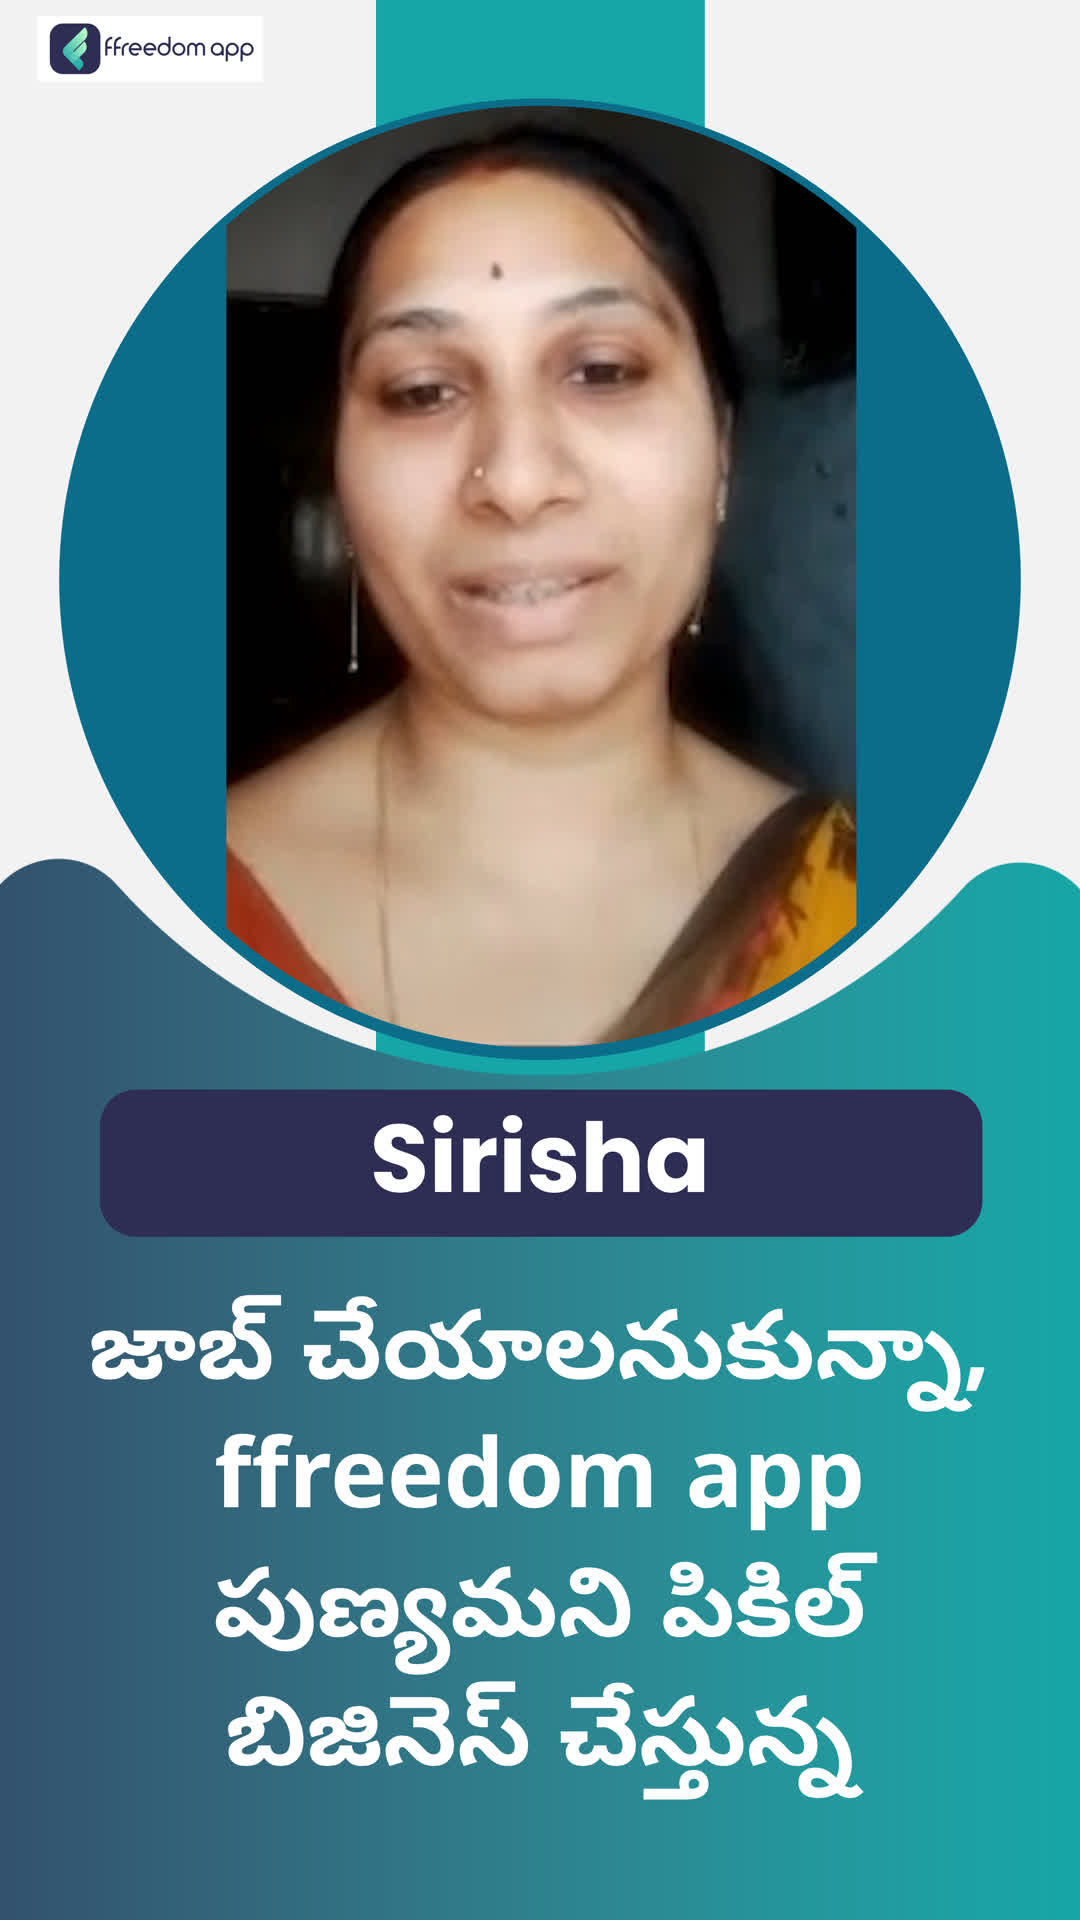 B Sireesha's Honest Review of ffreedom app - Krishna ,Andhra Pradesh